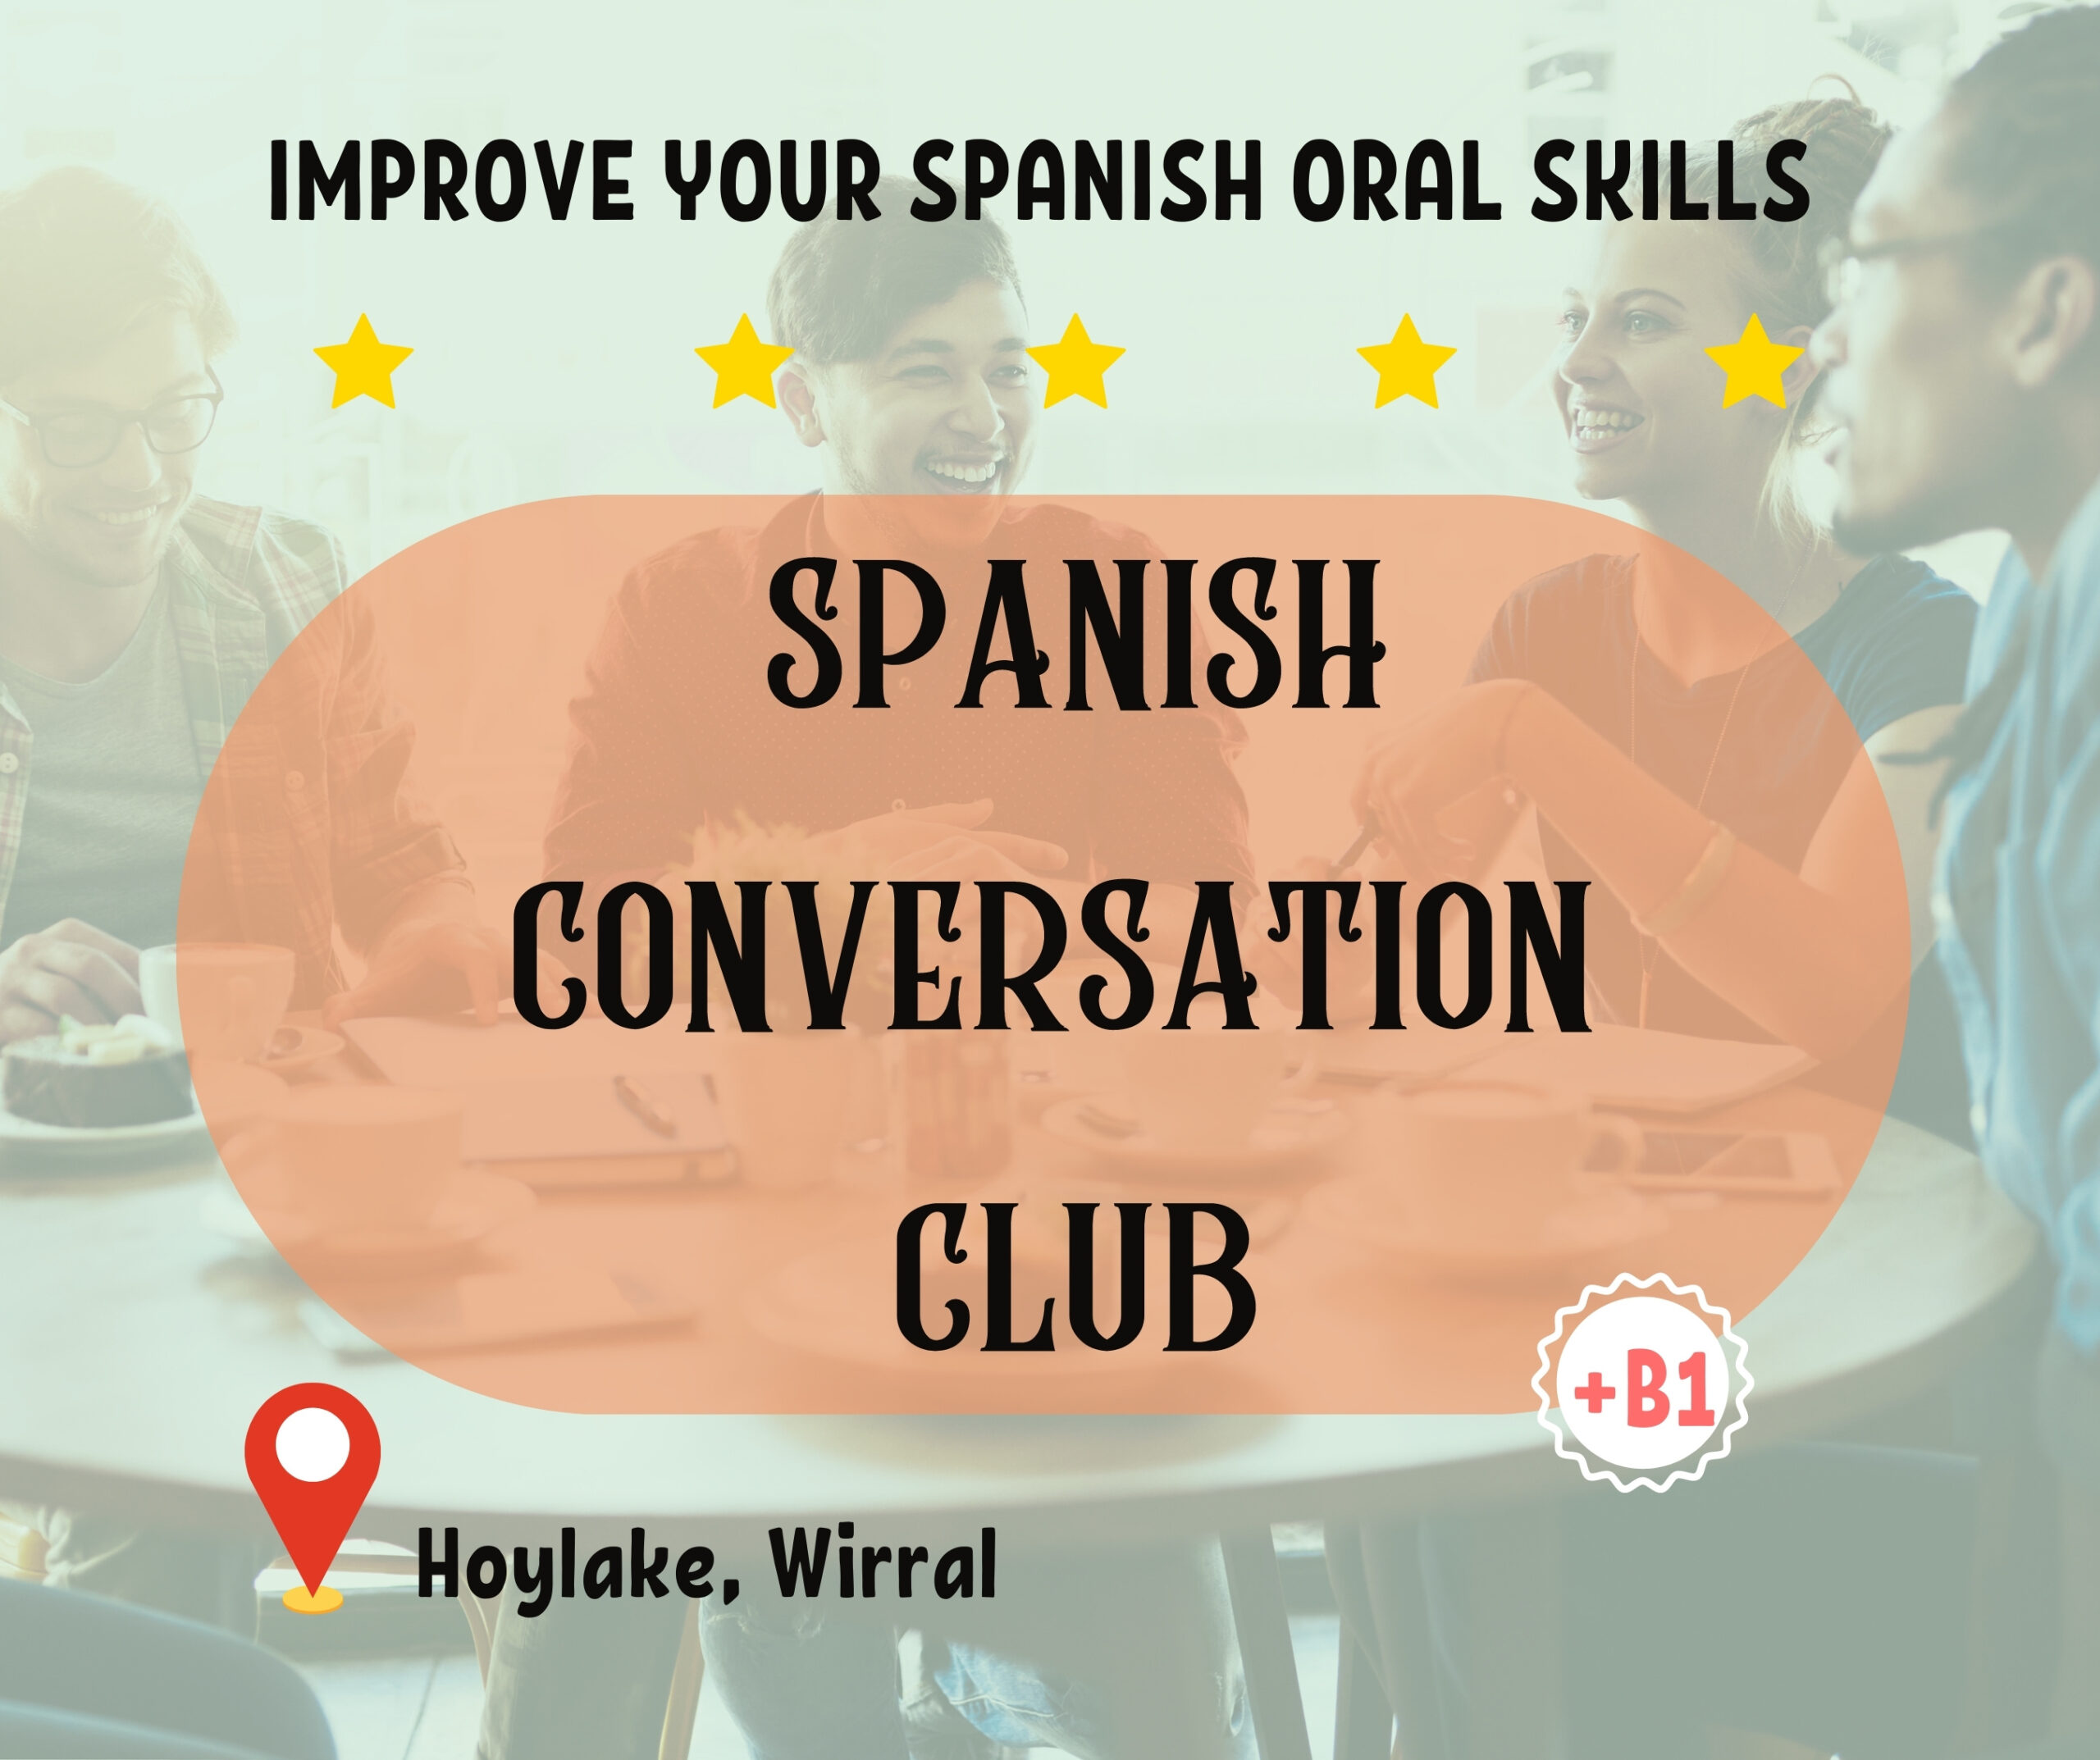 Spanish conversation club Hoylake